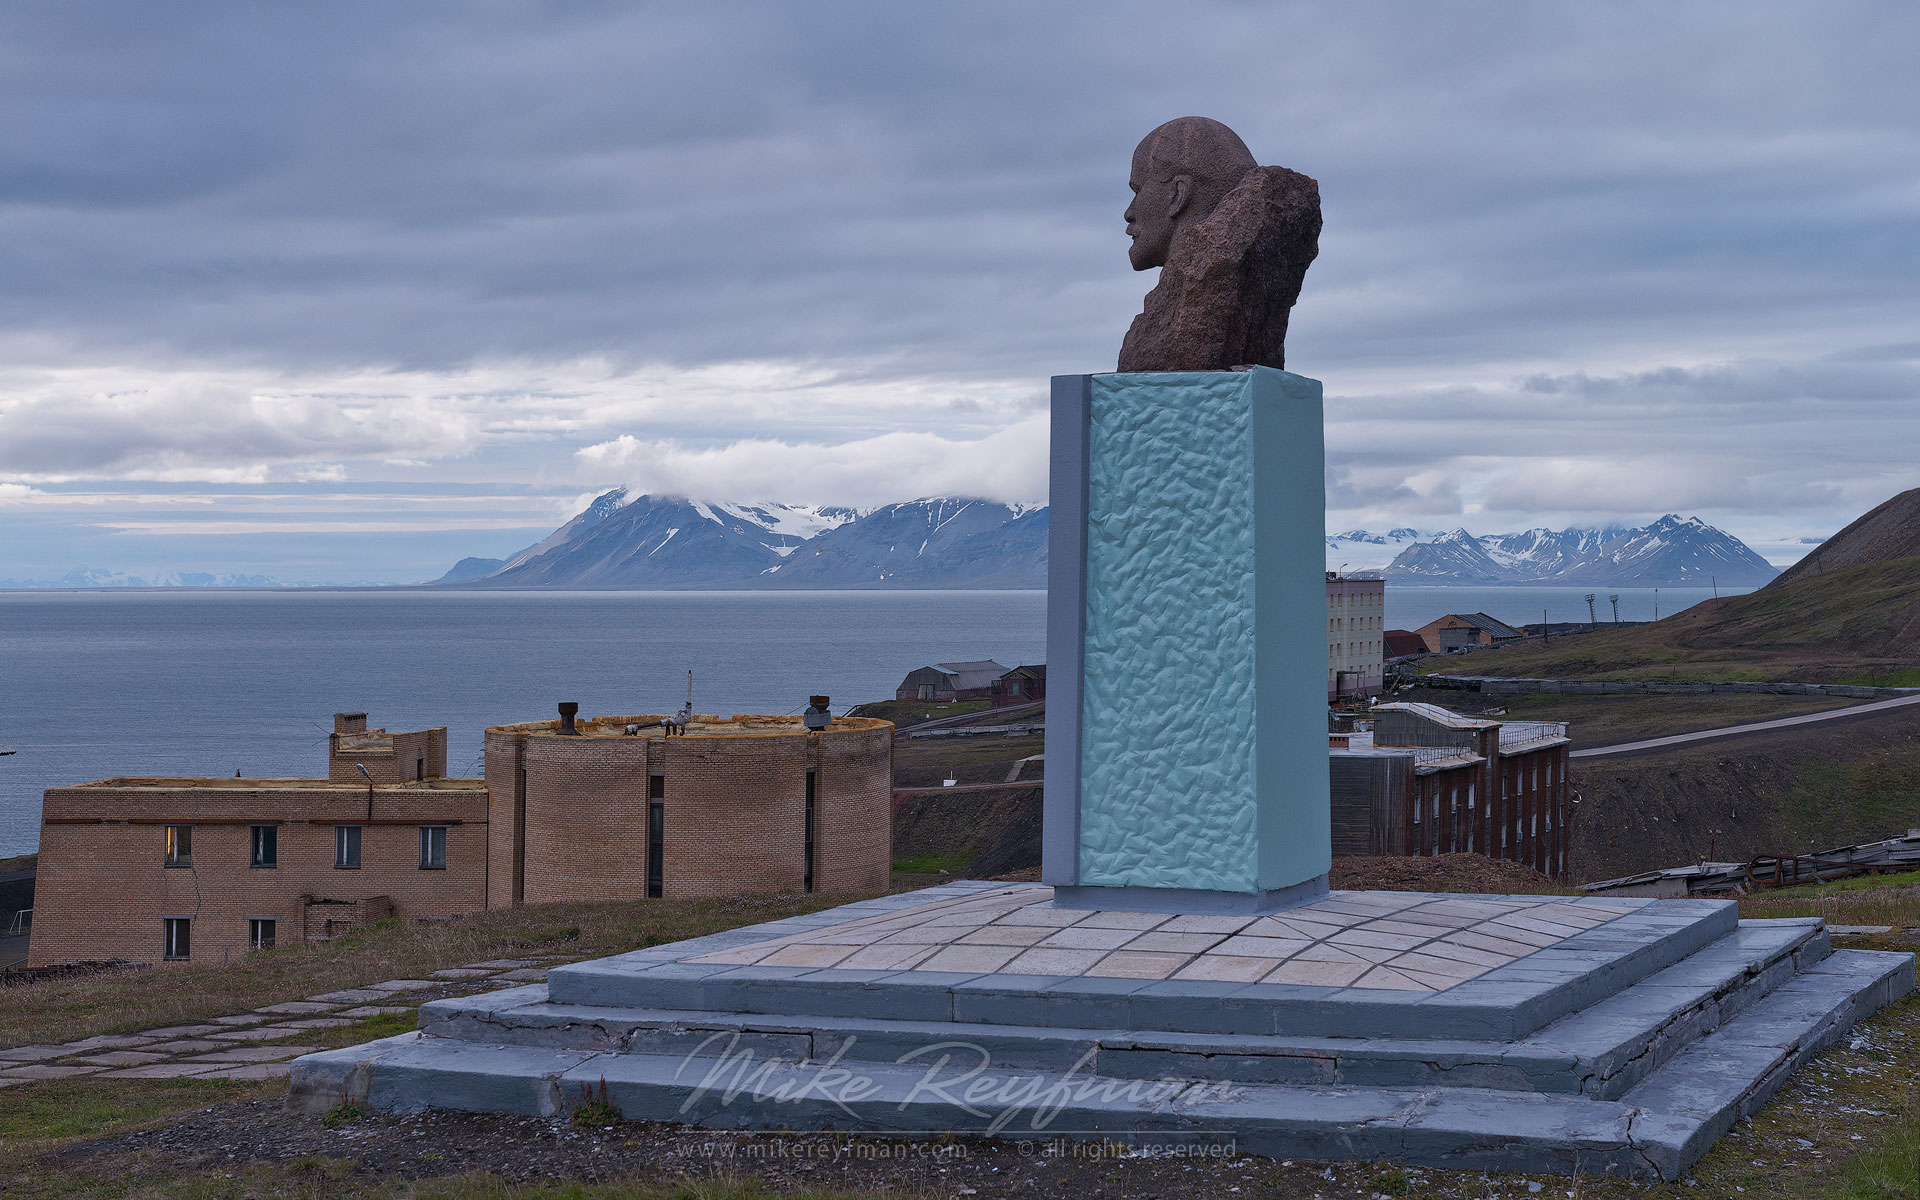 http://www.mikereyfman.com/Photography-Landscape-Nature/Arctic-Landscape-Svalbard-Spitsbergen-Norway/big/MR0183.jpg